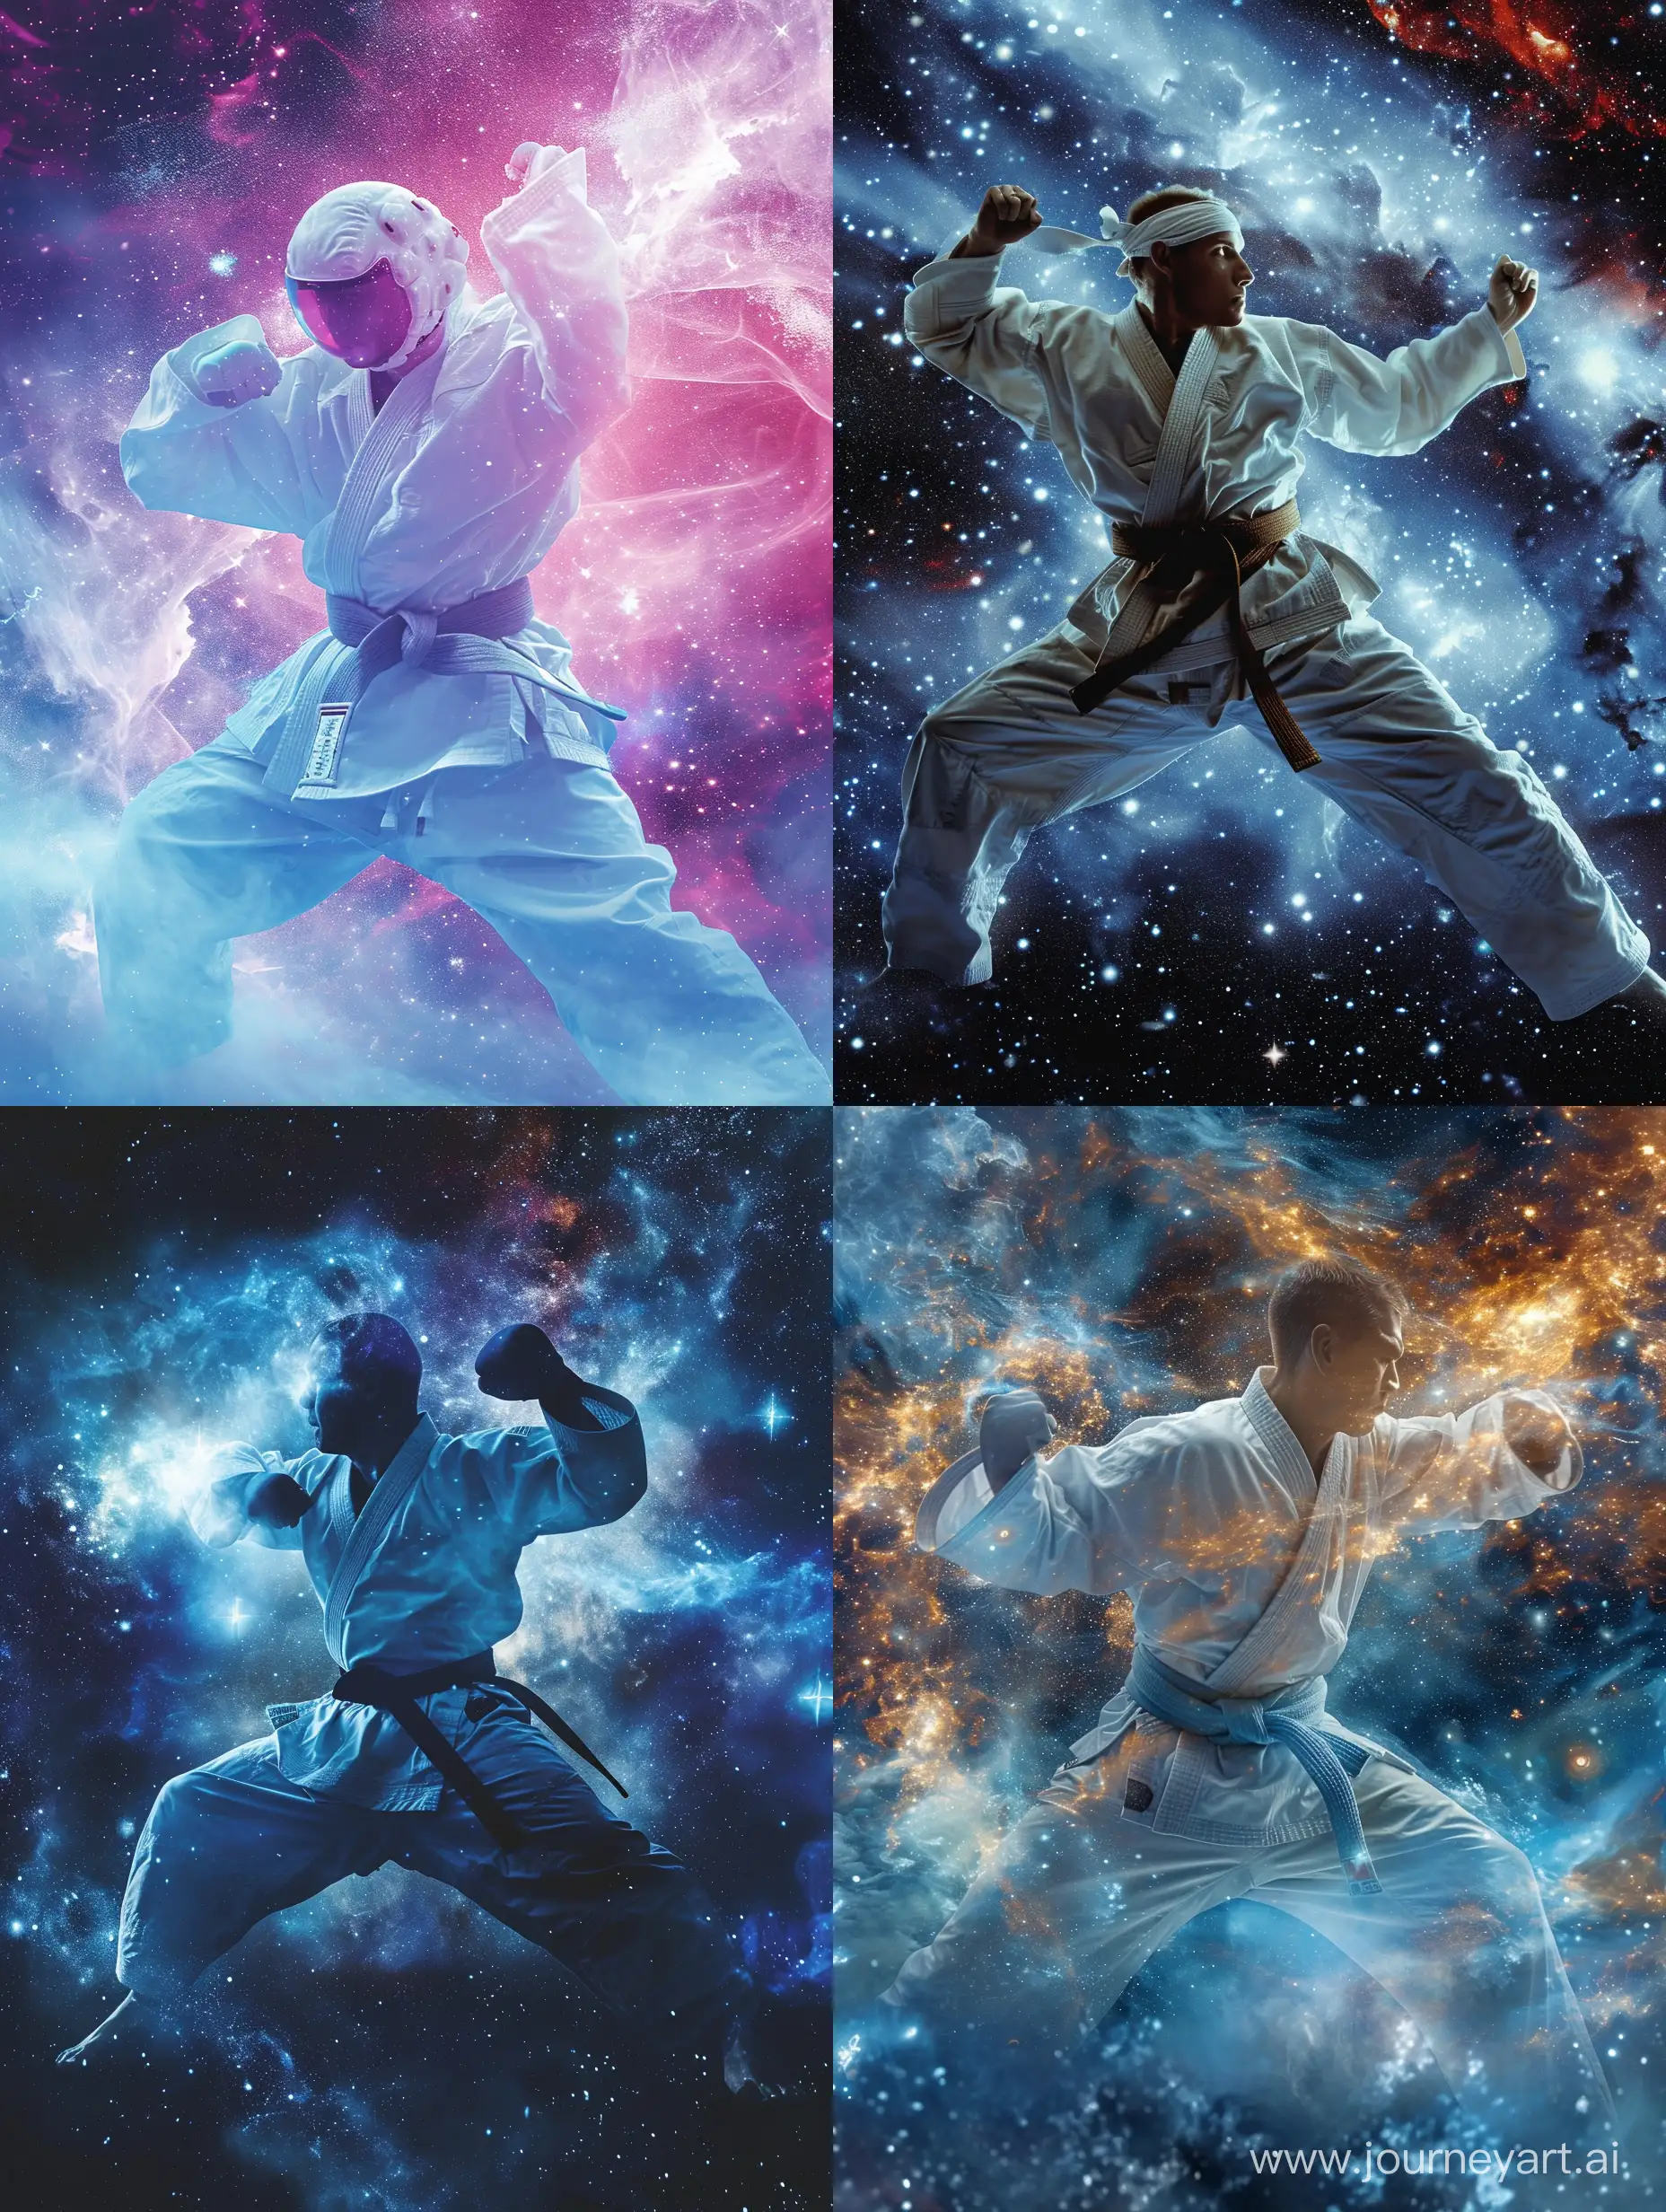 Astral karate